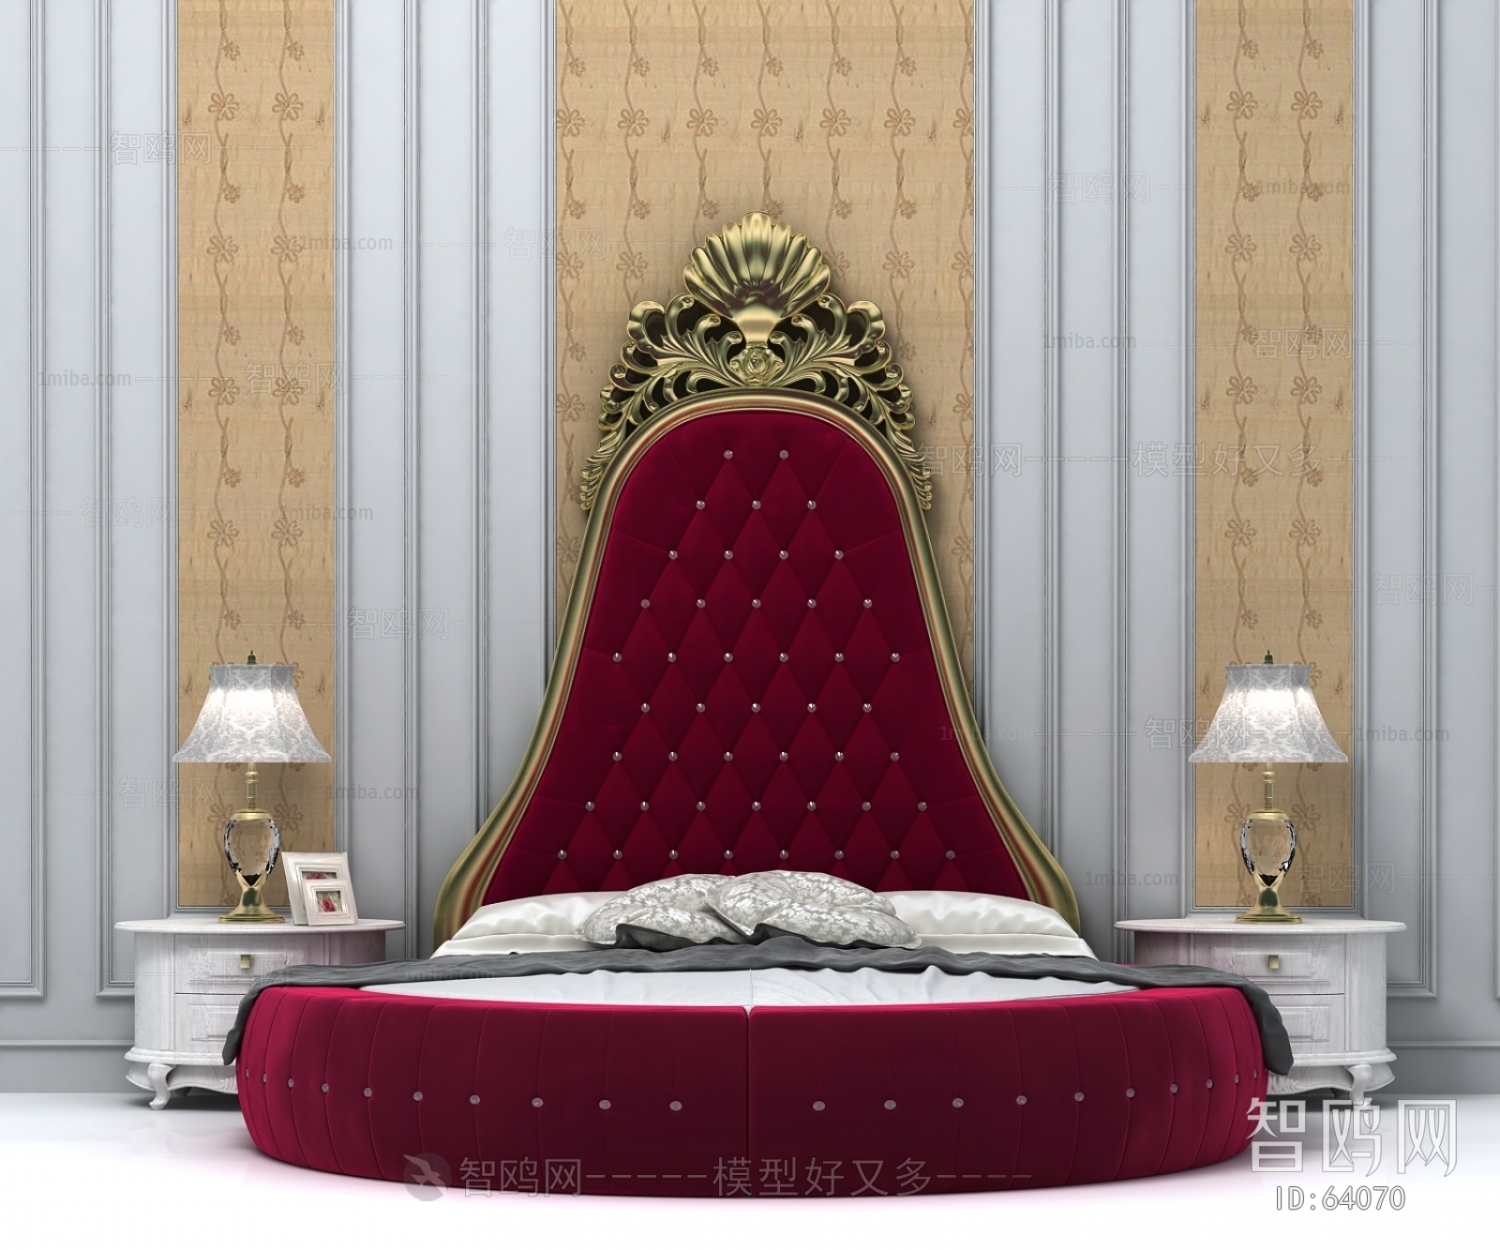 European Style Round Bed